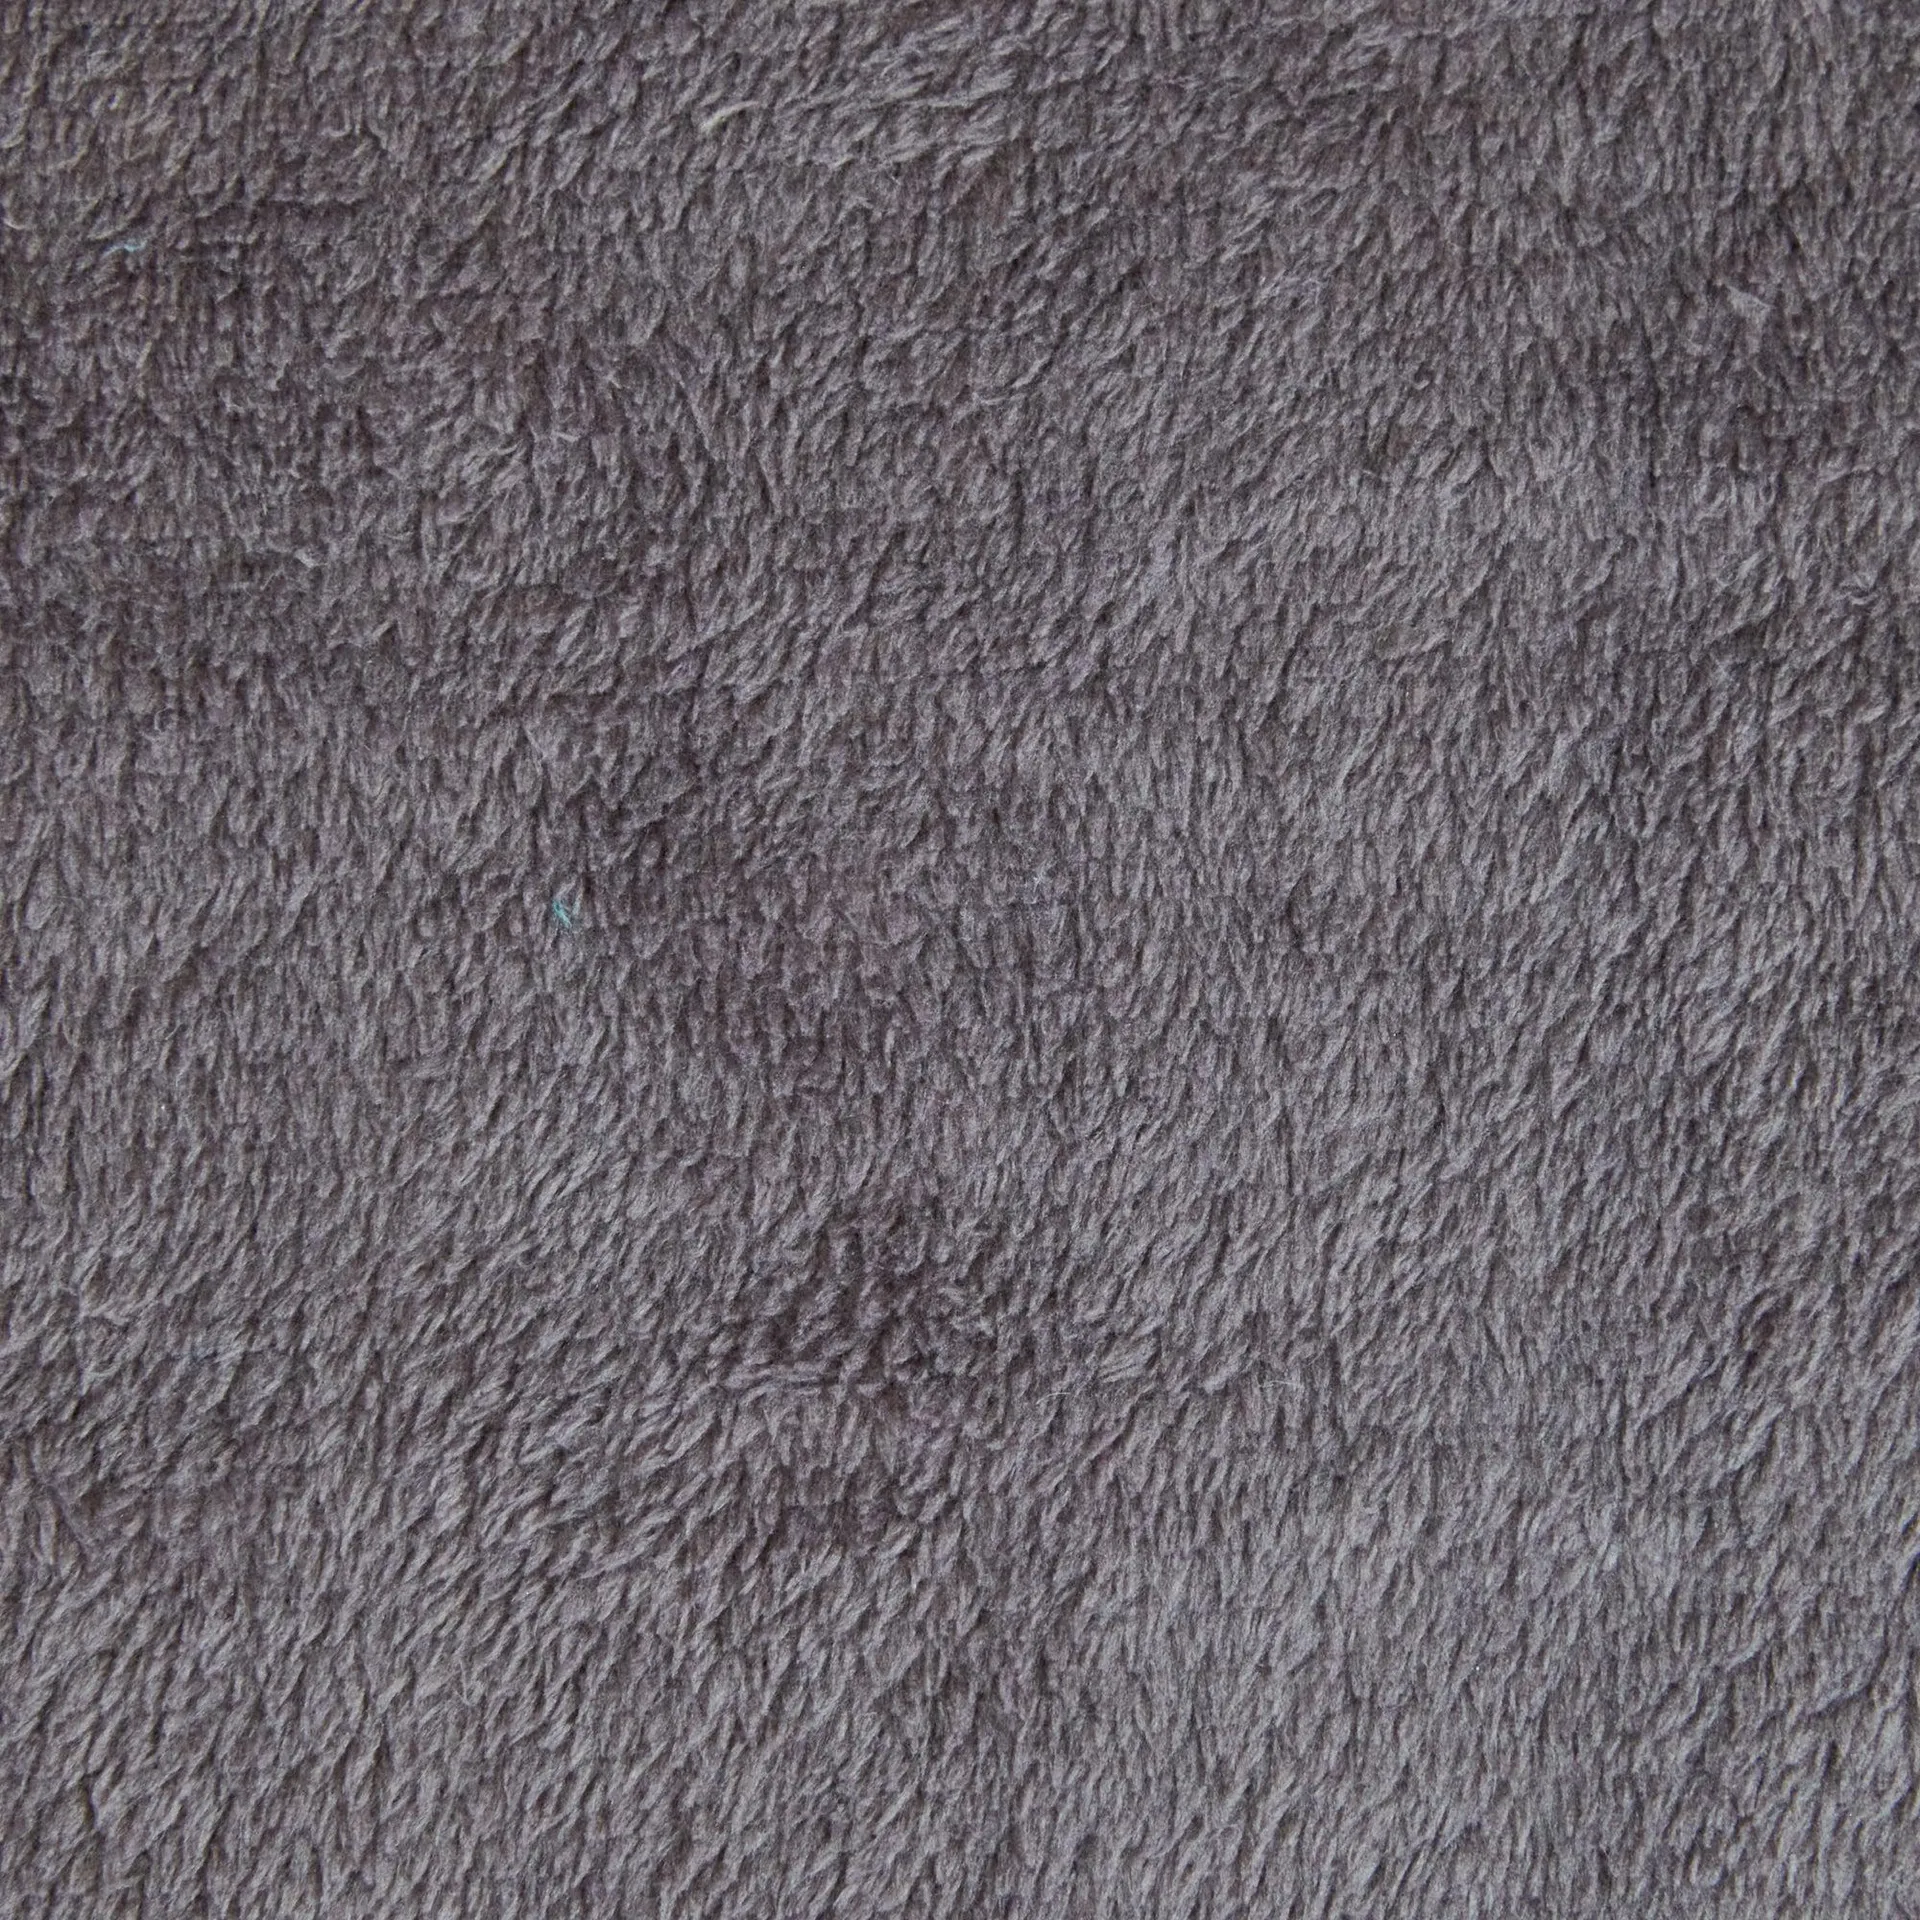 Coral Fleece Plain Fabric, Brown- Width 155cm